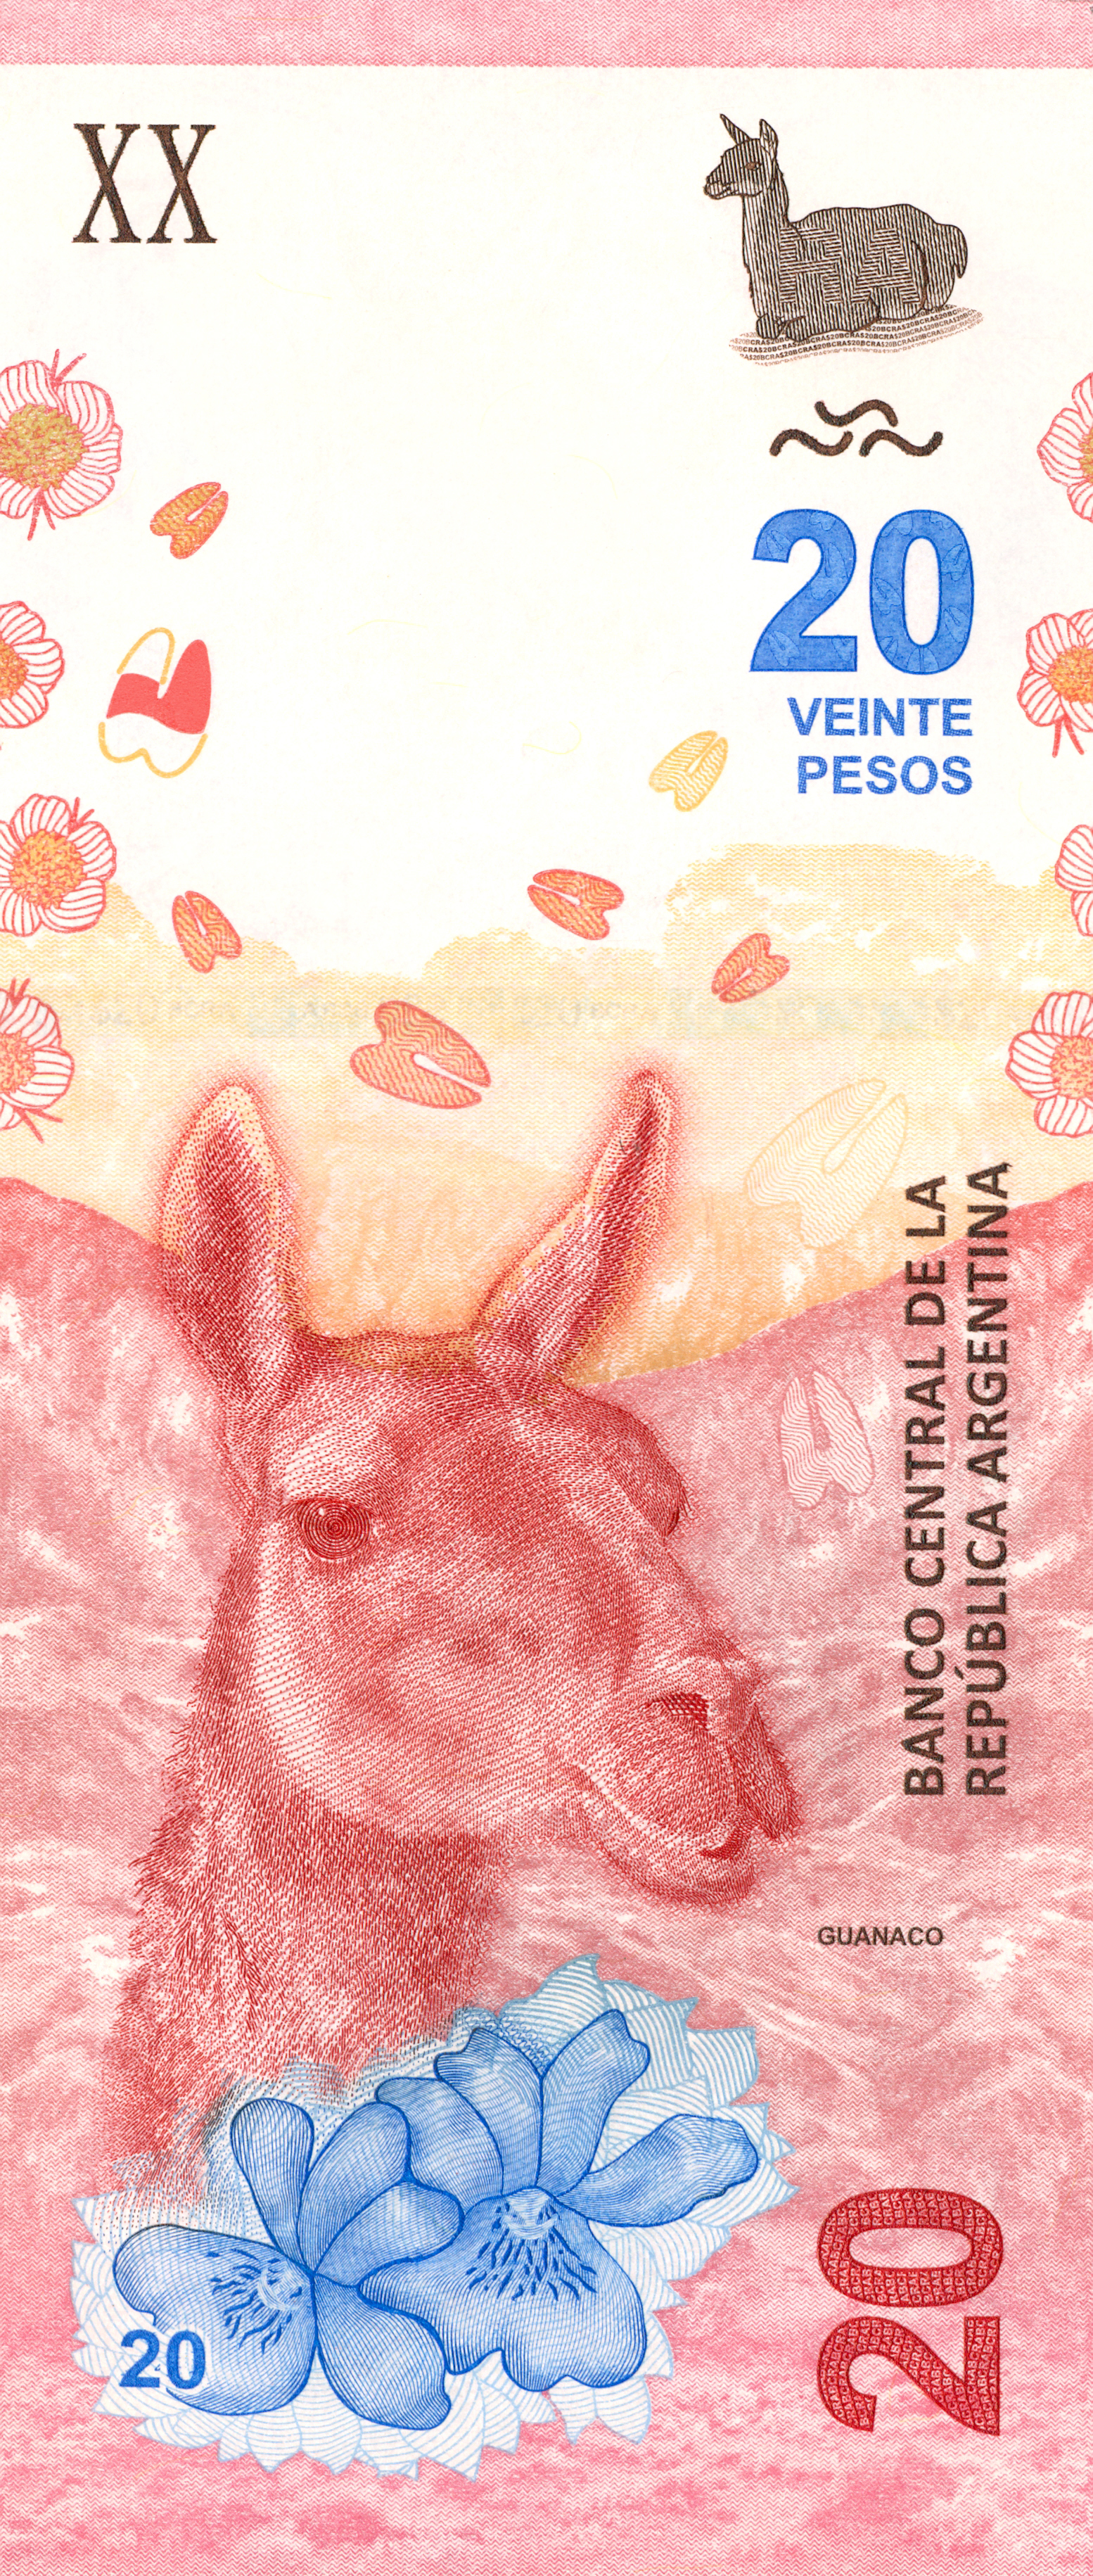 imágen en miniatura del billete de 20 pesos